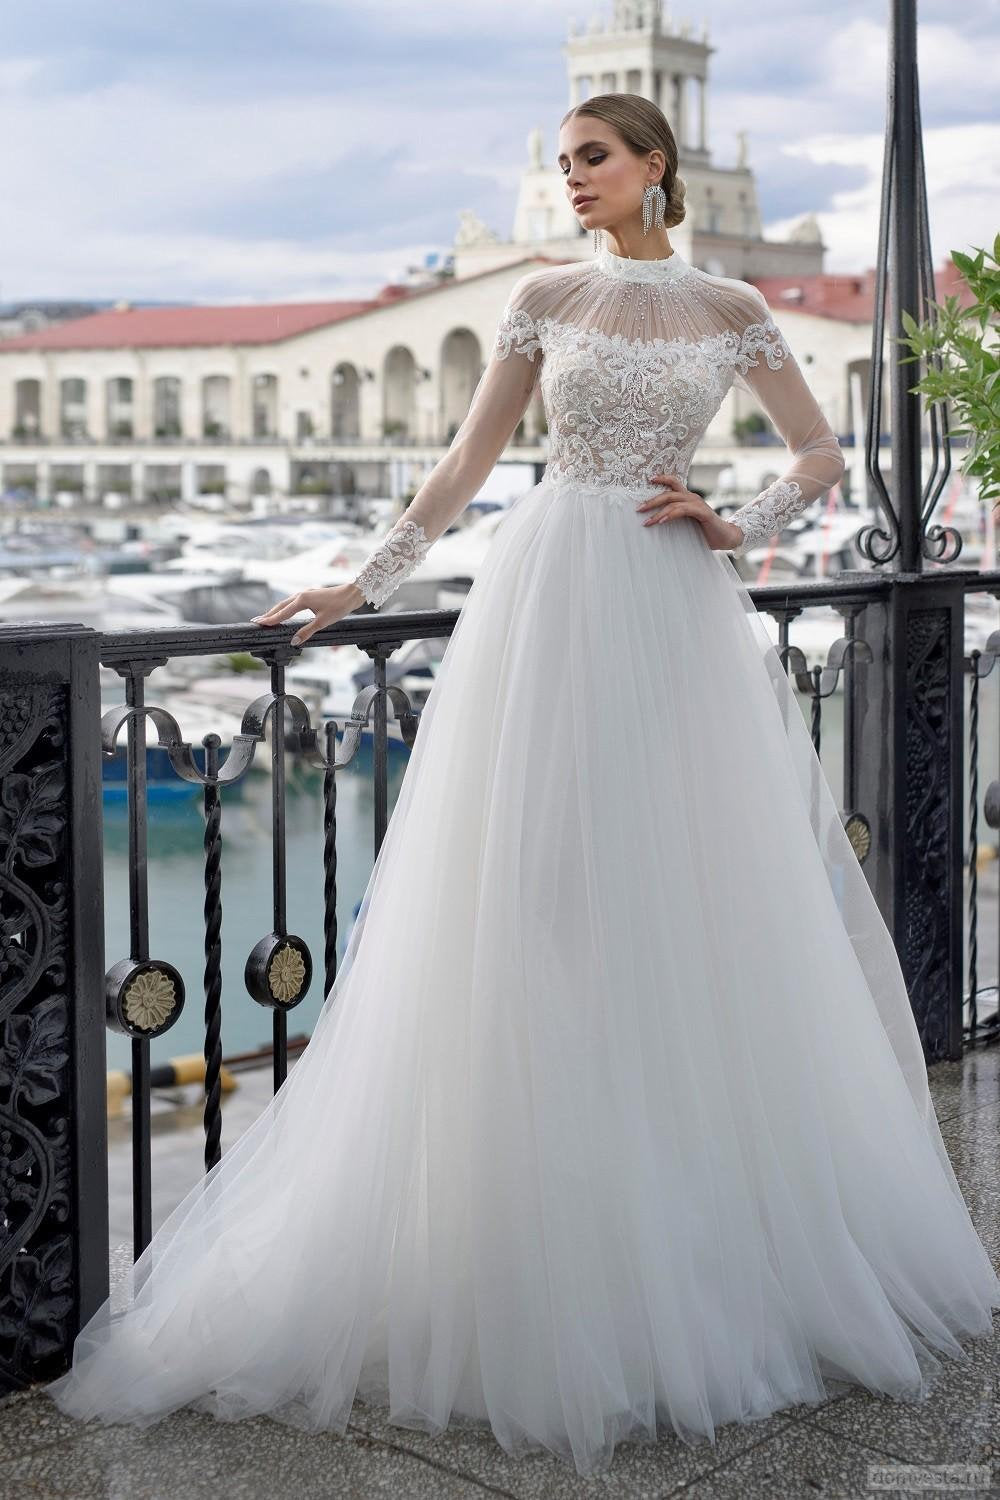 Original Beautiful Aline Wedding Dress Bridal Gown Long Sleeve High Neckline Tulle Skirt Lace Bodice Unique Design